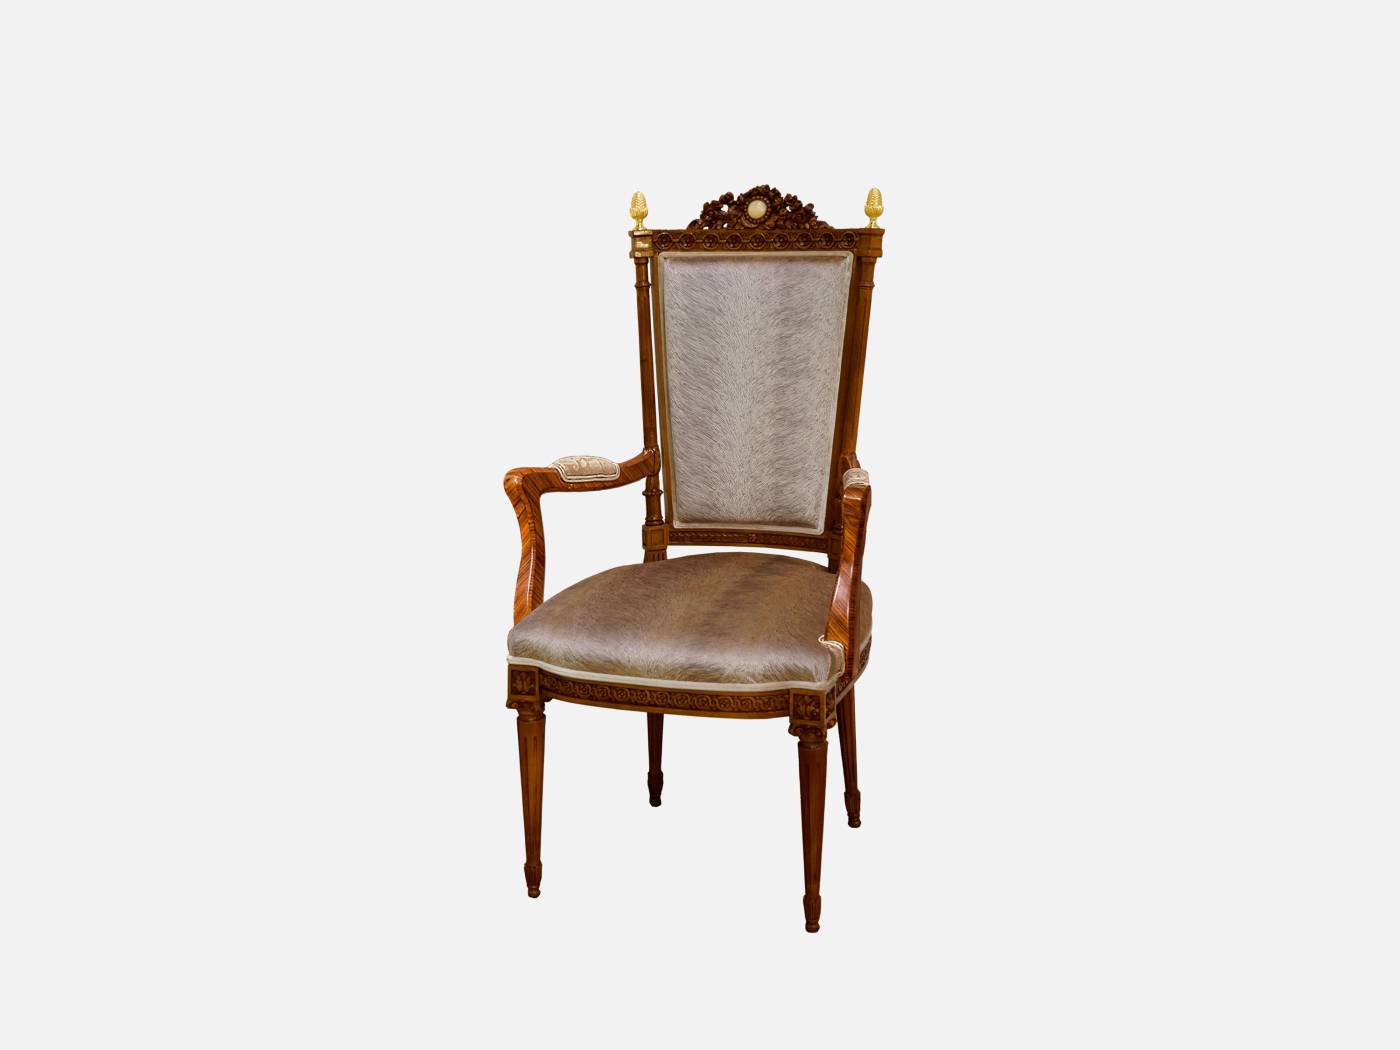 ART. 2069 – C.G. Capelletti Italian Luxury Classic Chairs. Made in Italy classic interior design